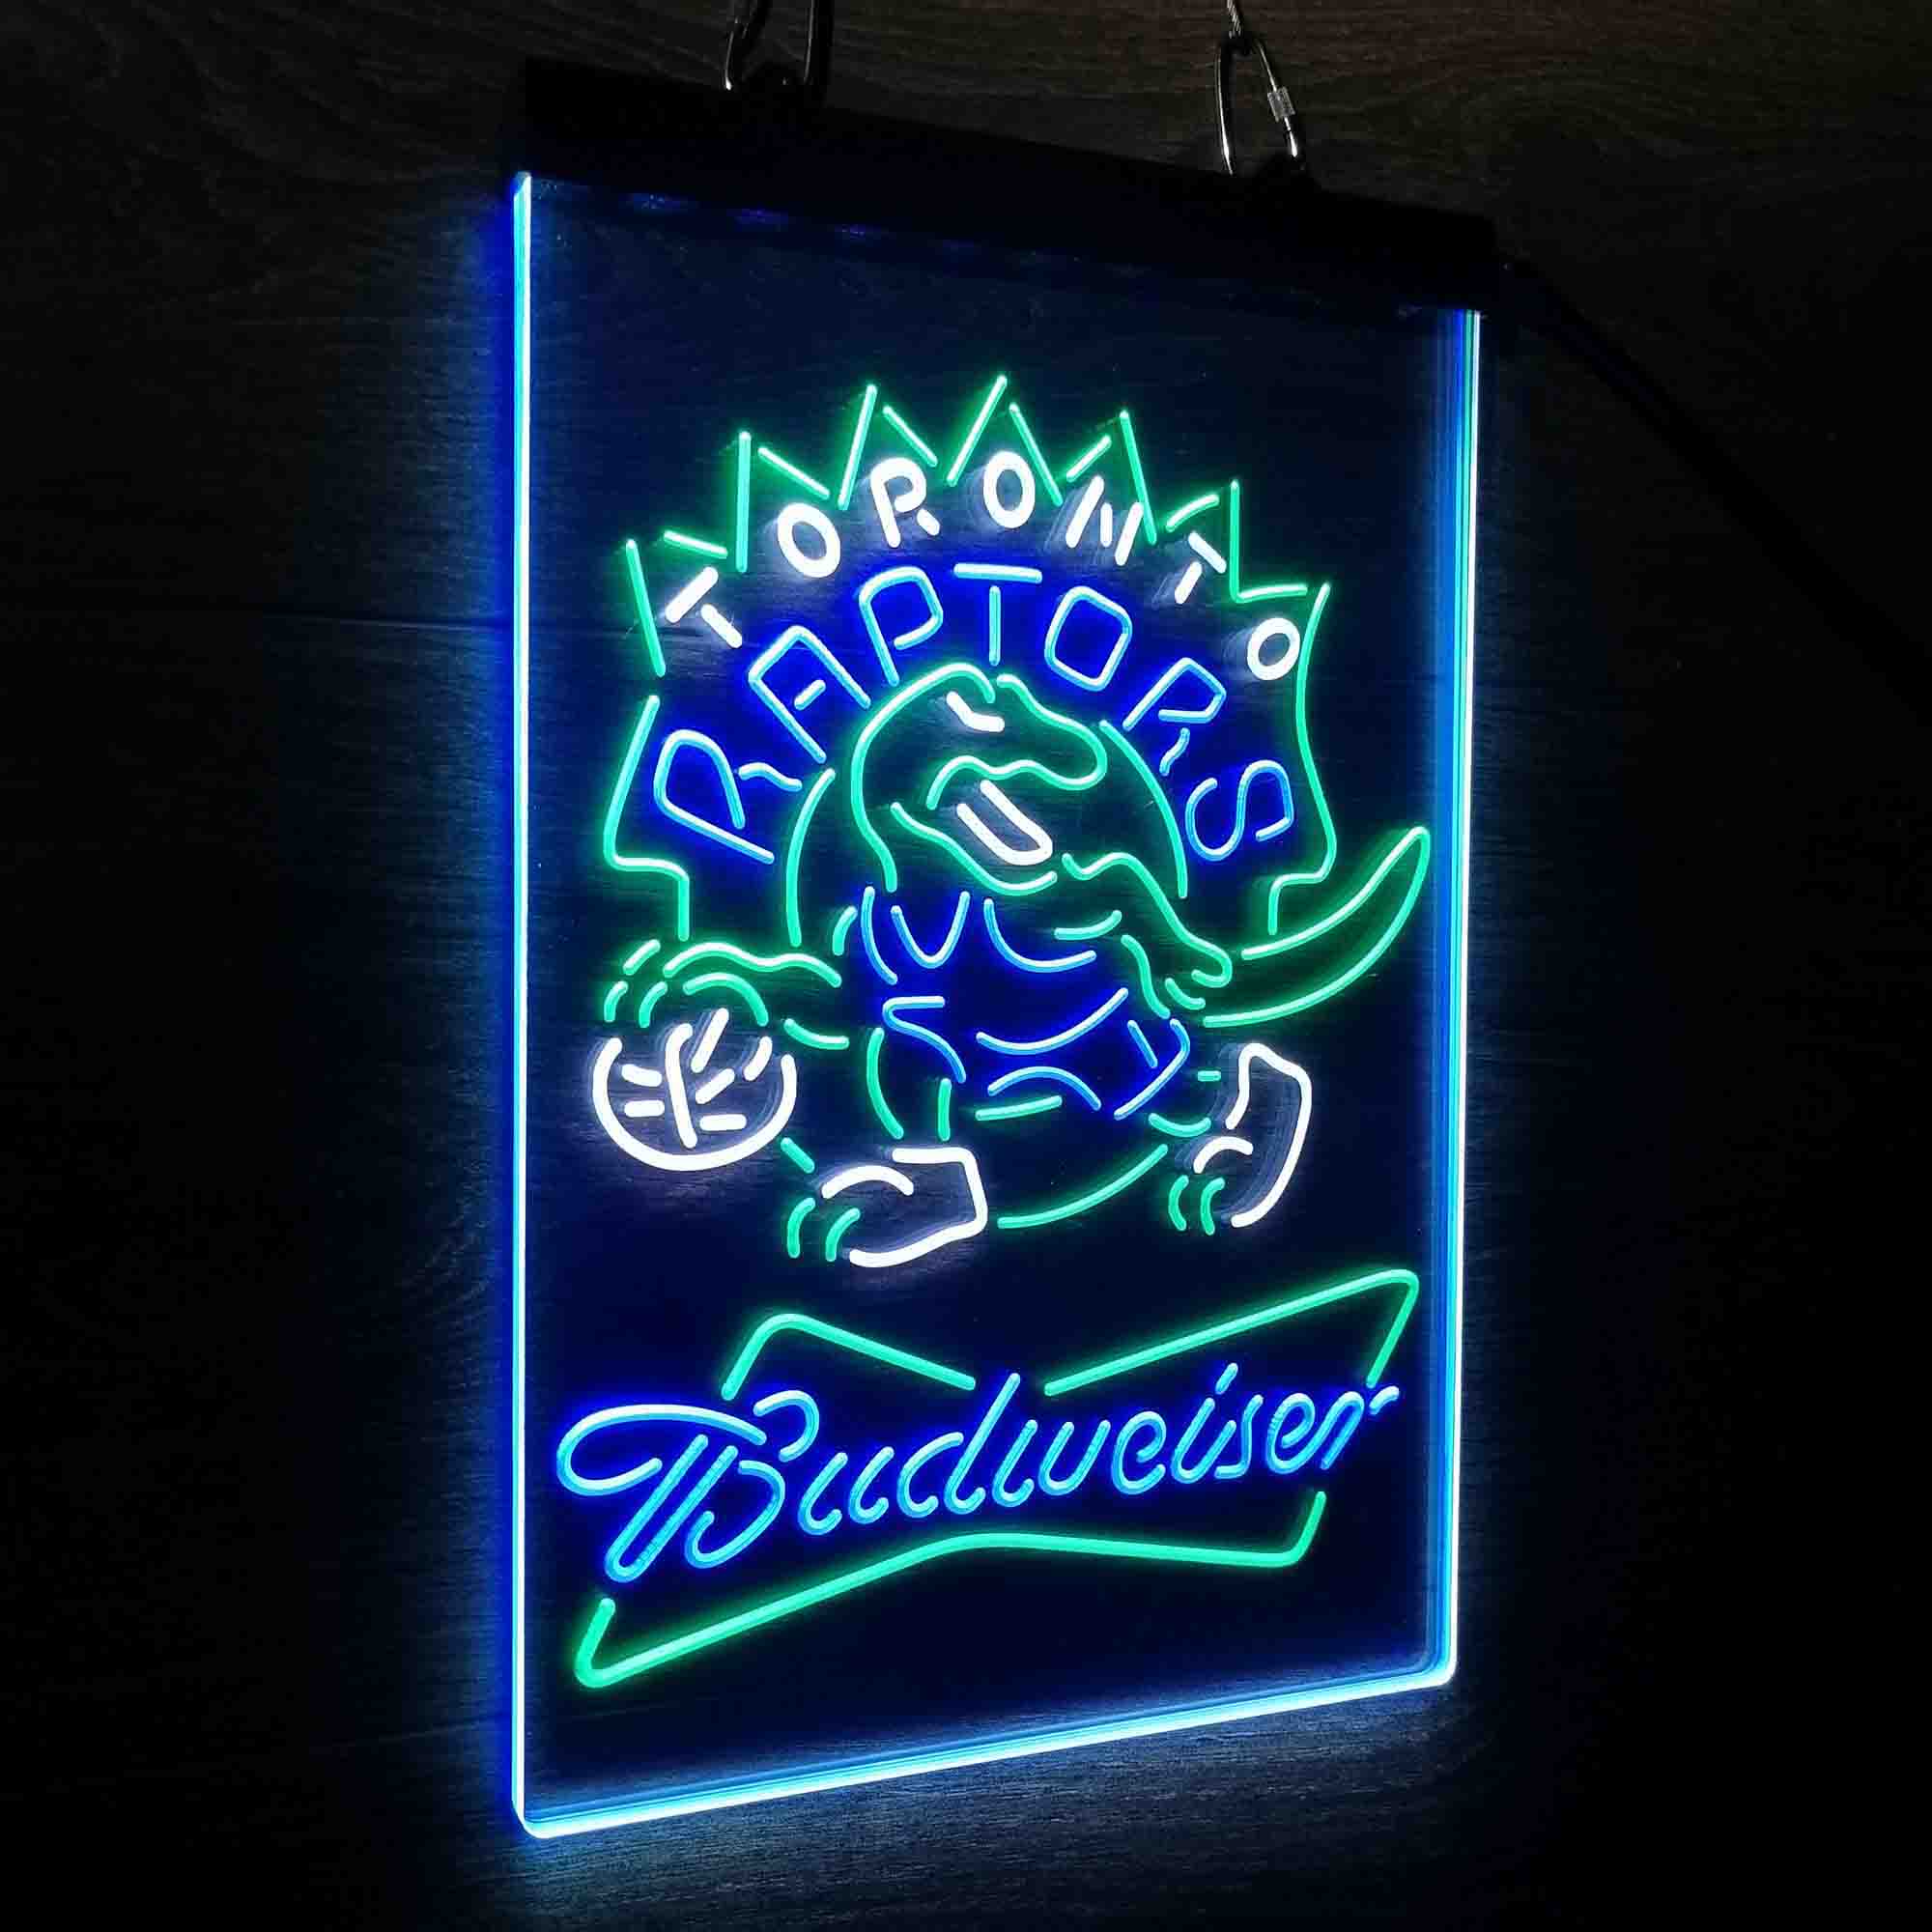 Toronto Raptors Nba Budweiser Neon LED Sign 3 Colors